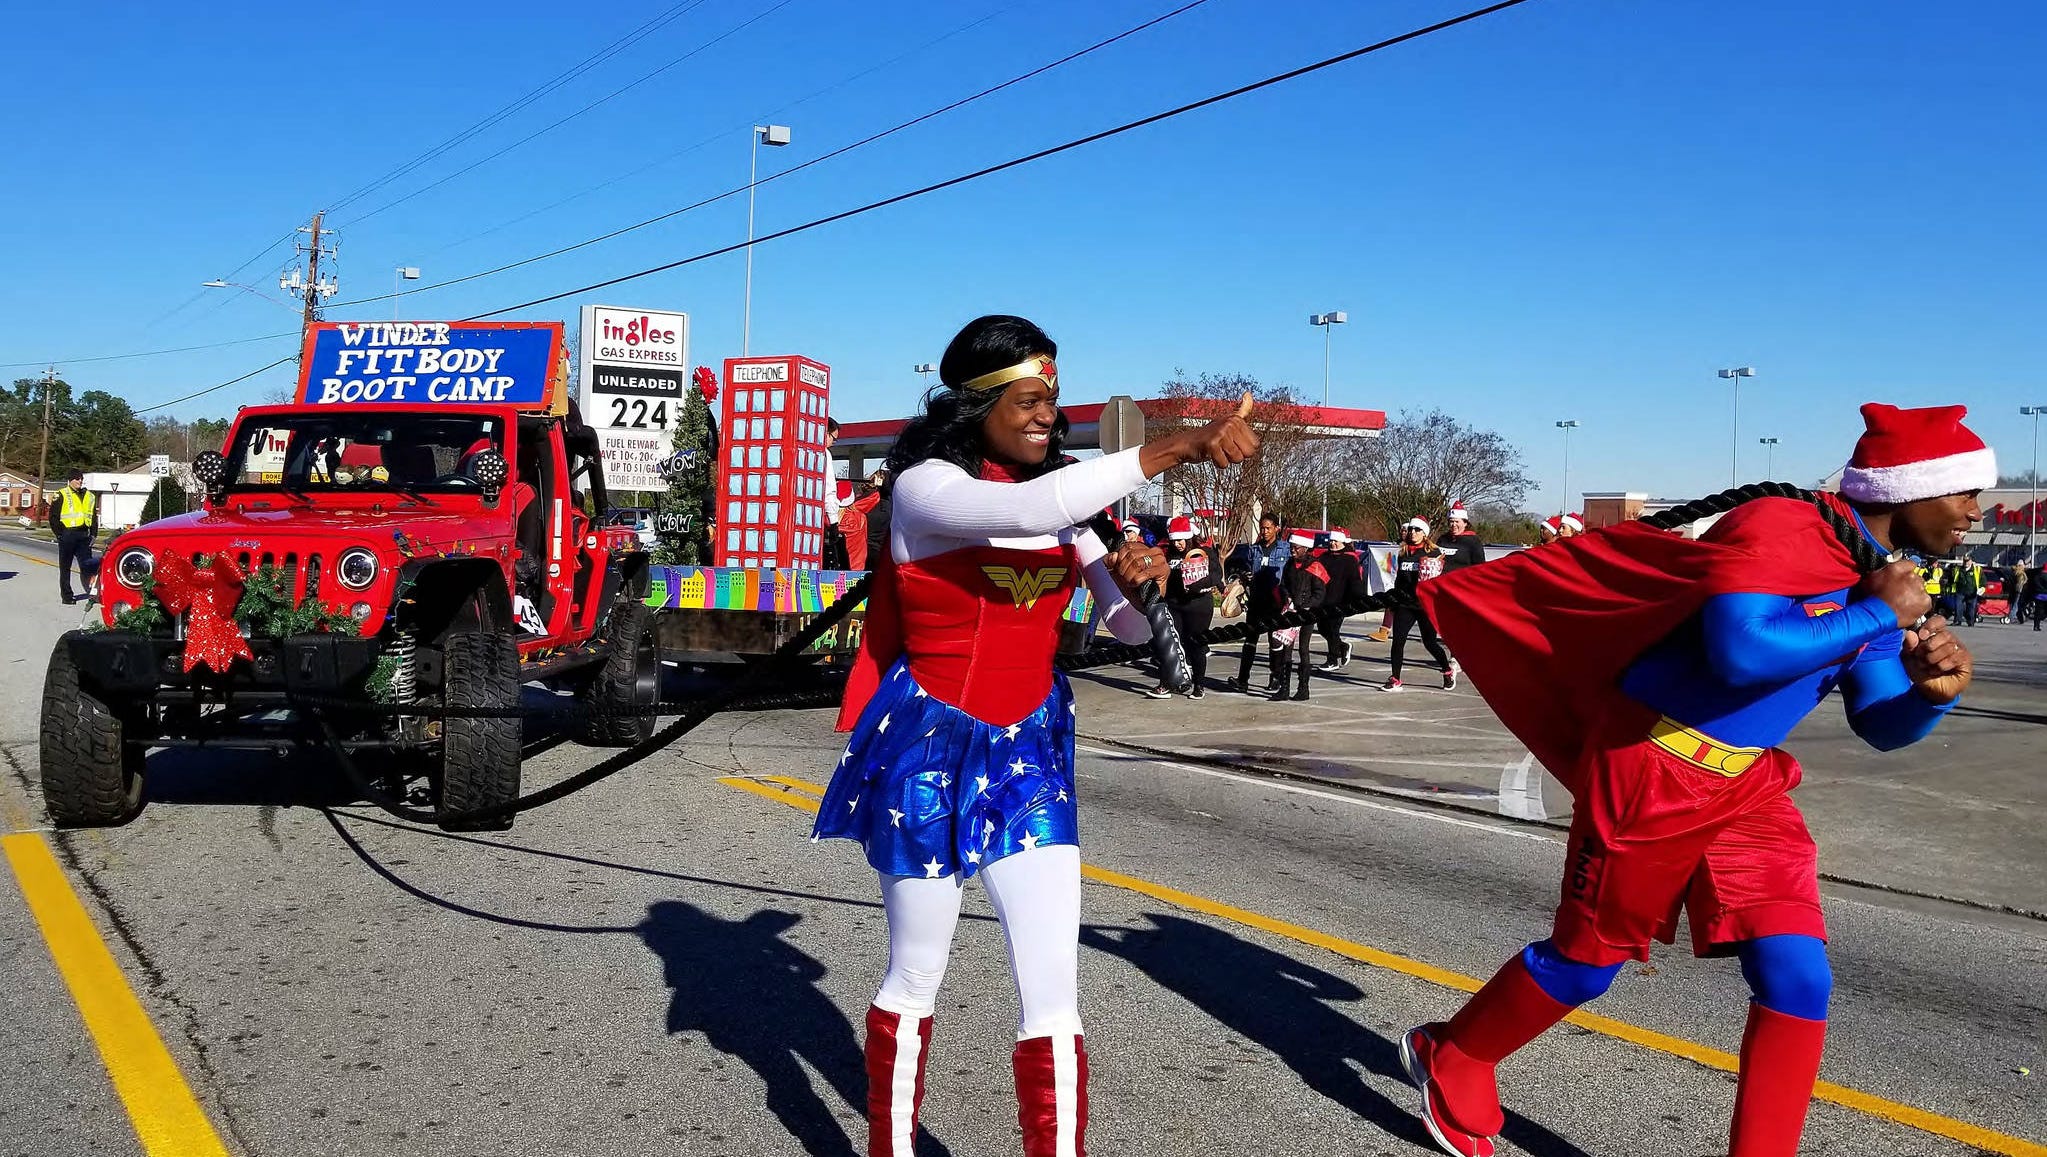 Superheroes win Winder Christmas Parade float design contest